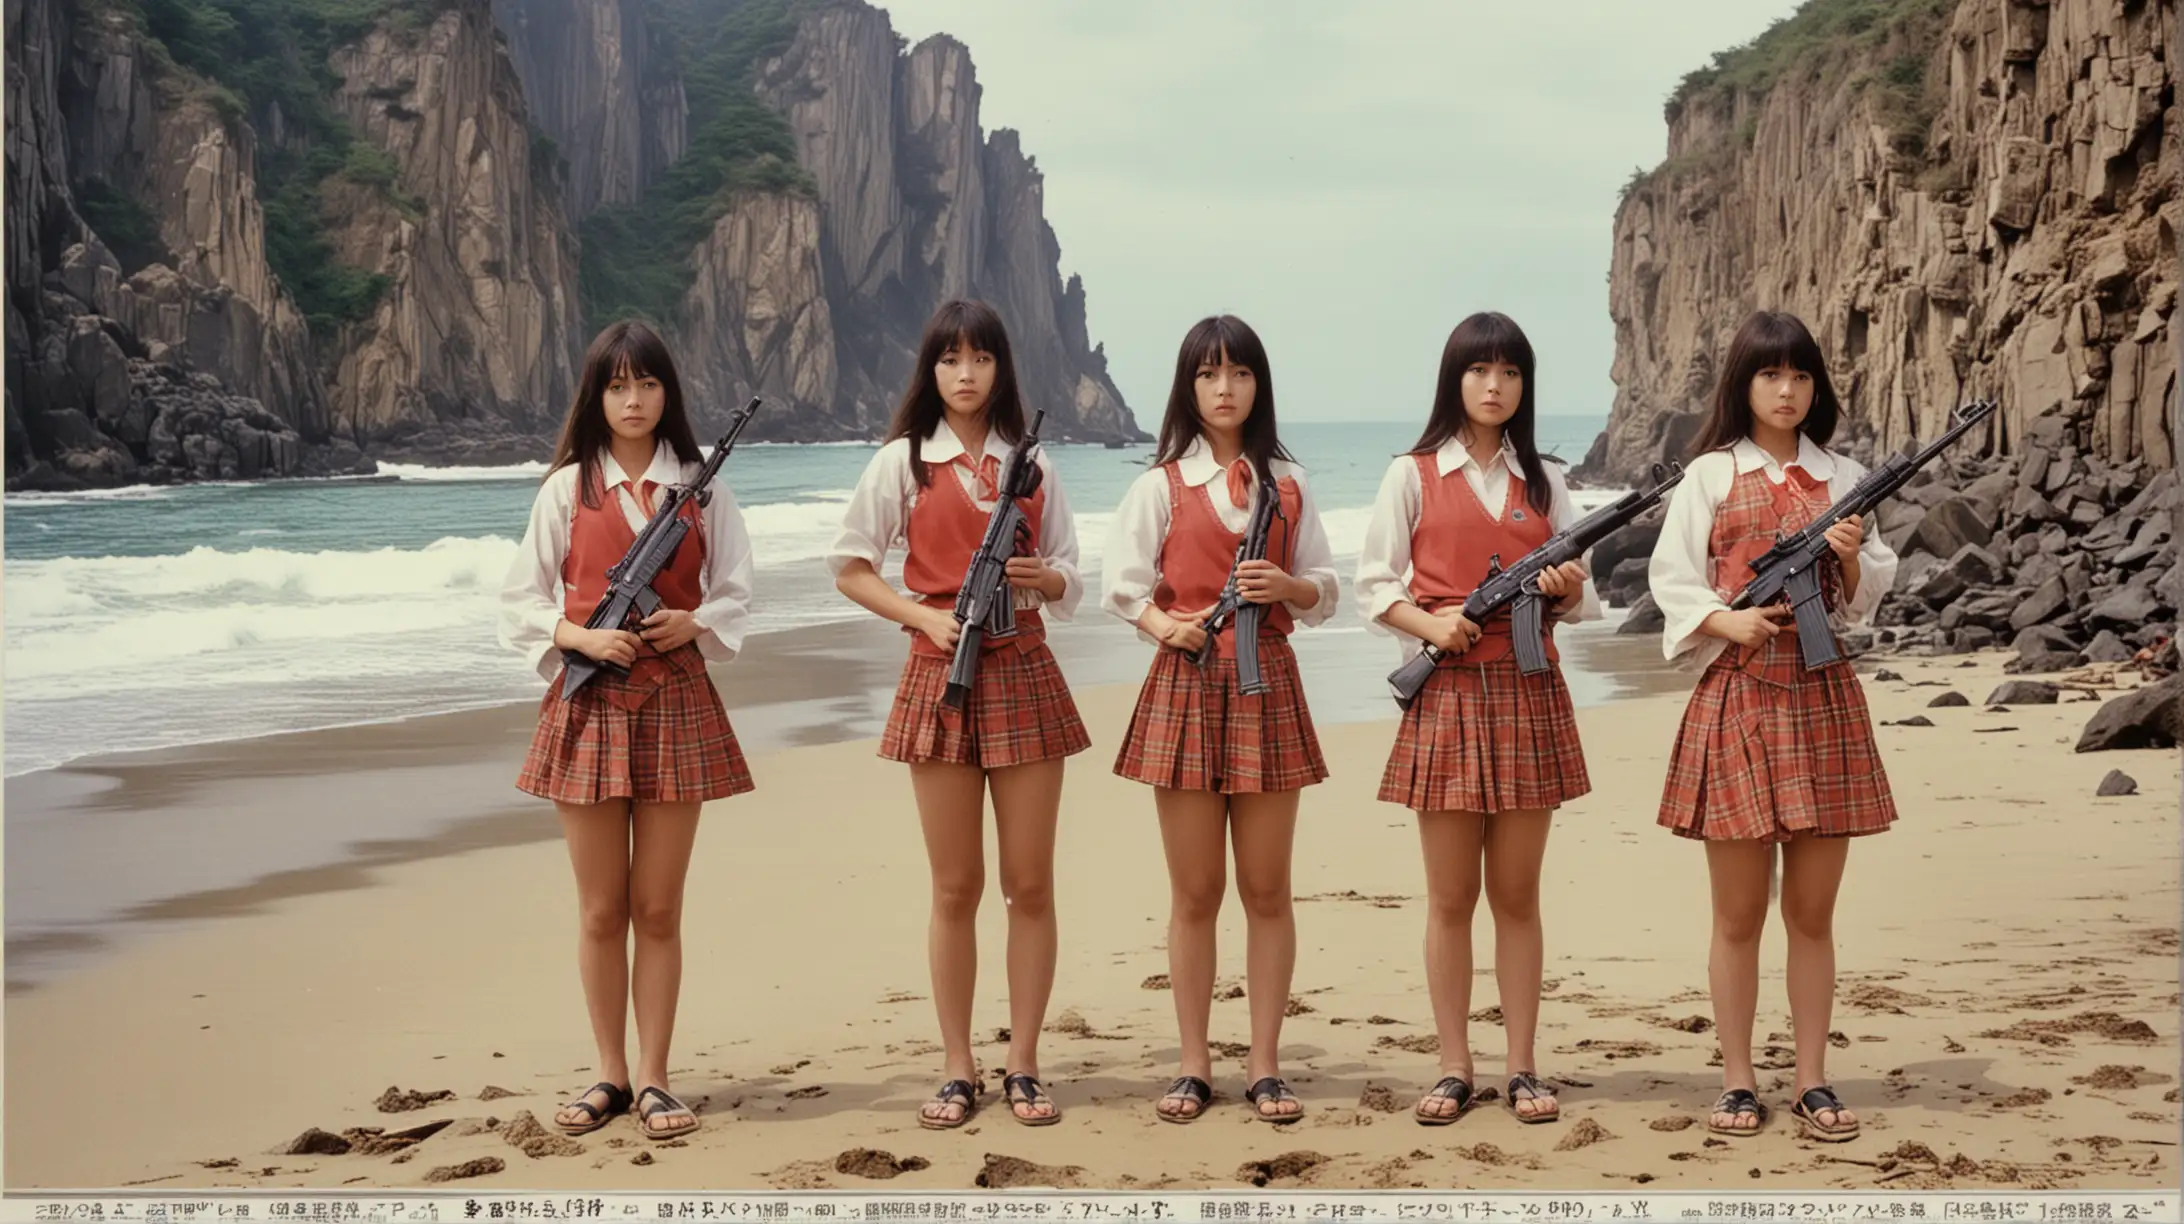 Exploitation Film Scene Schoolgirls with Firearms on Beach in Death Game